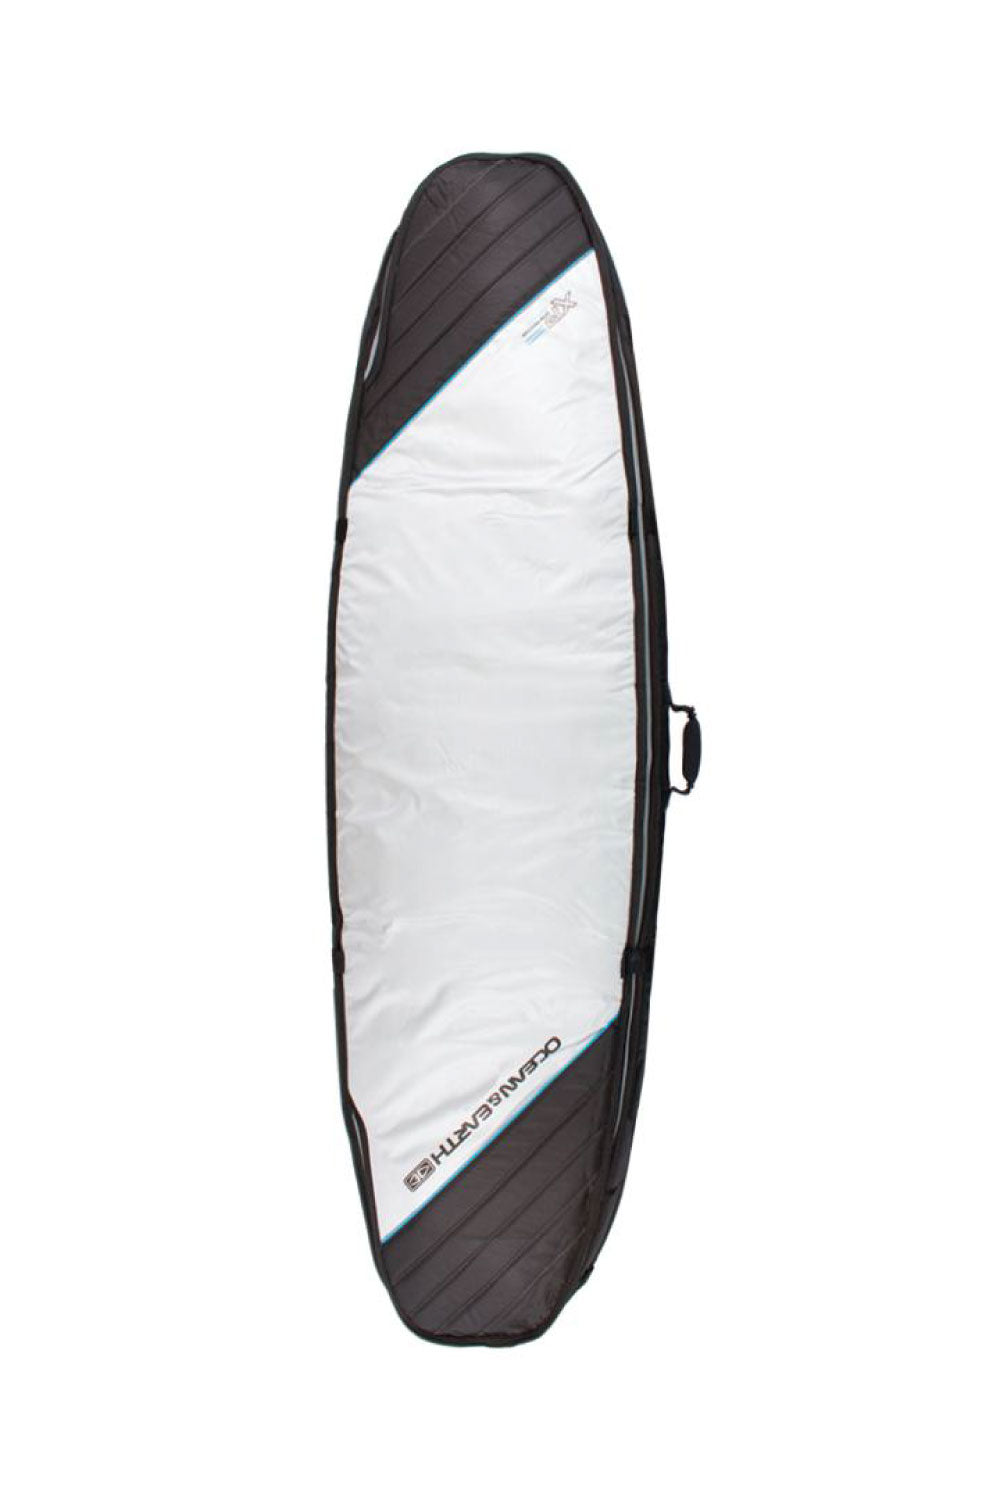 Ocean & Earth Double Compact Shortboard Cover